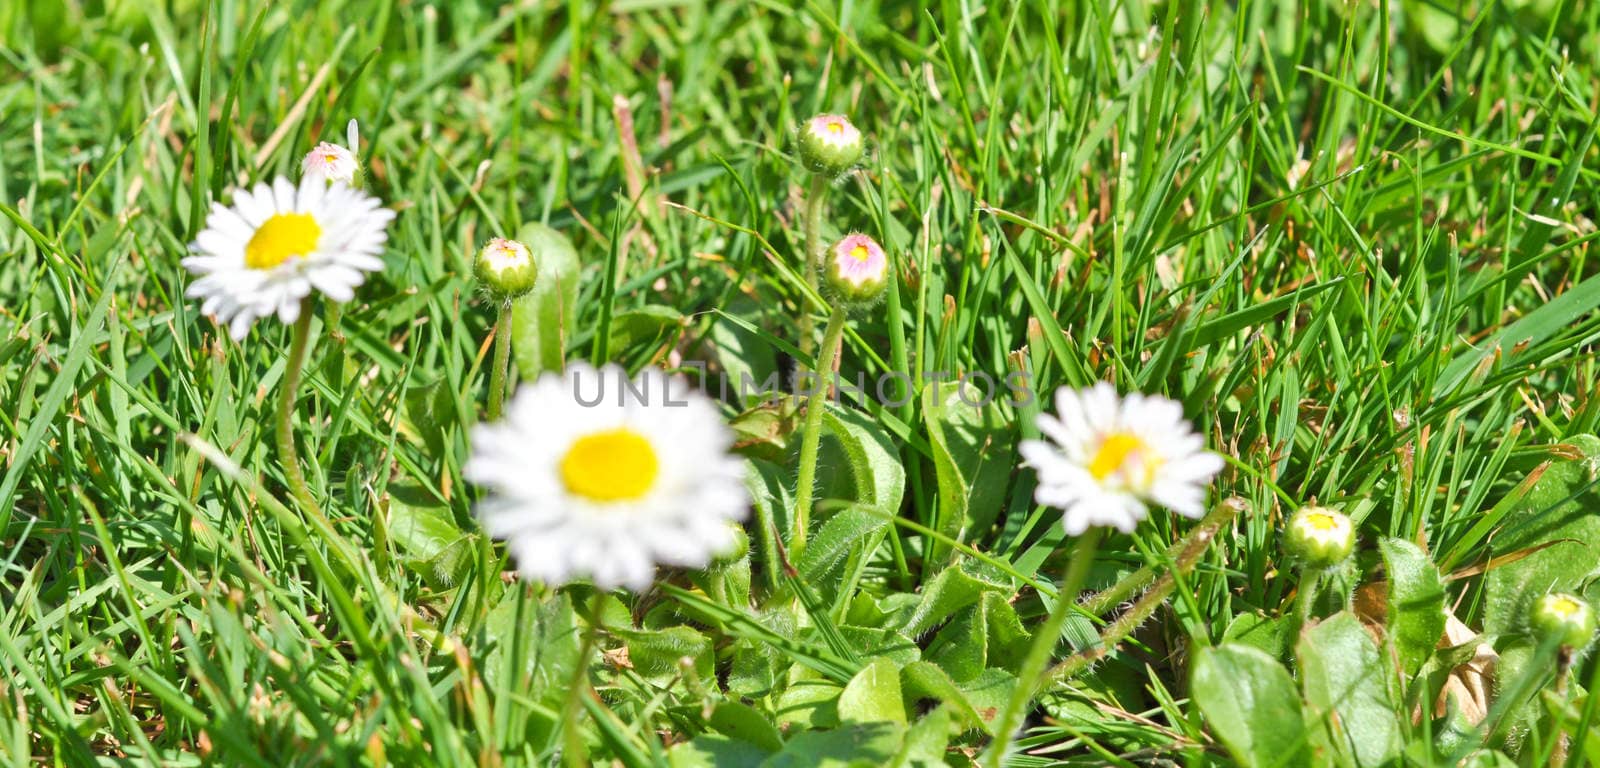 bush daisies in green grass by vlaru